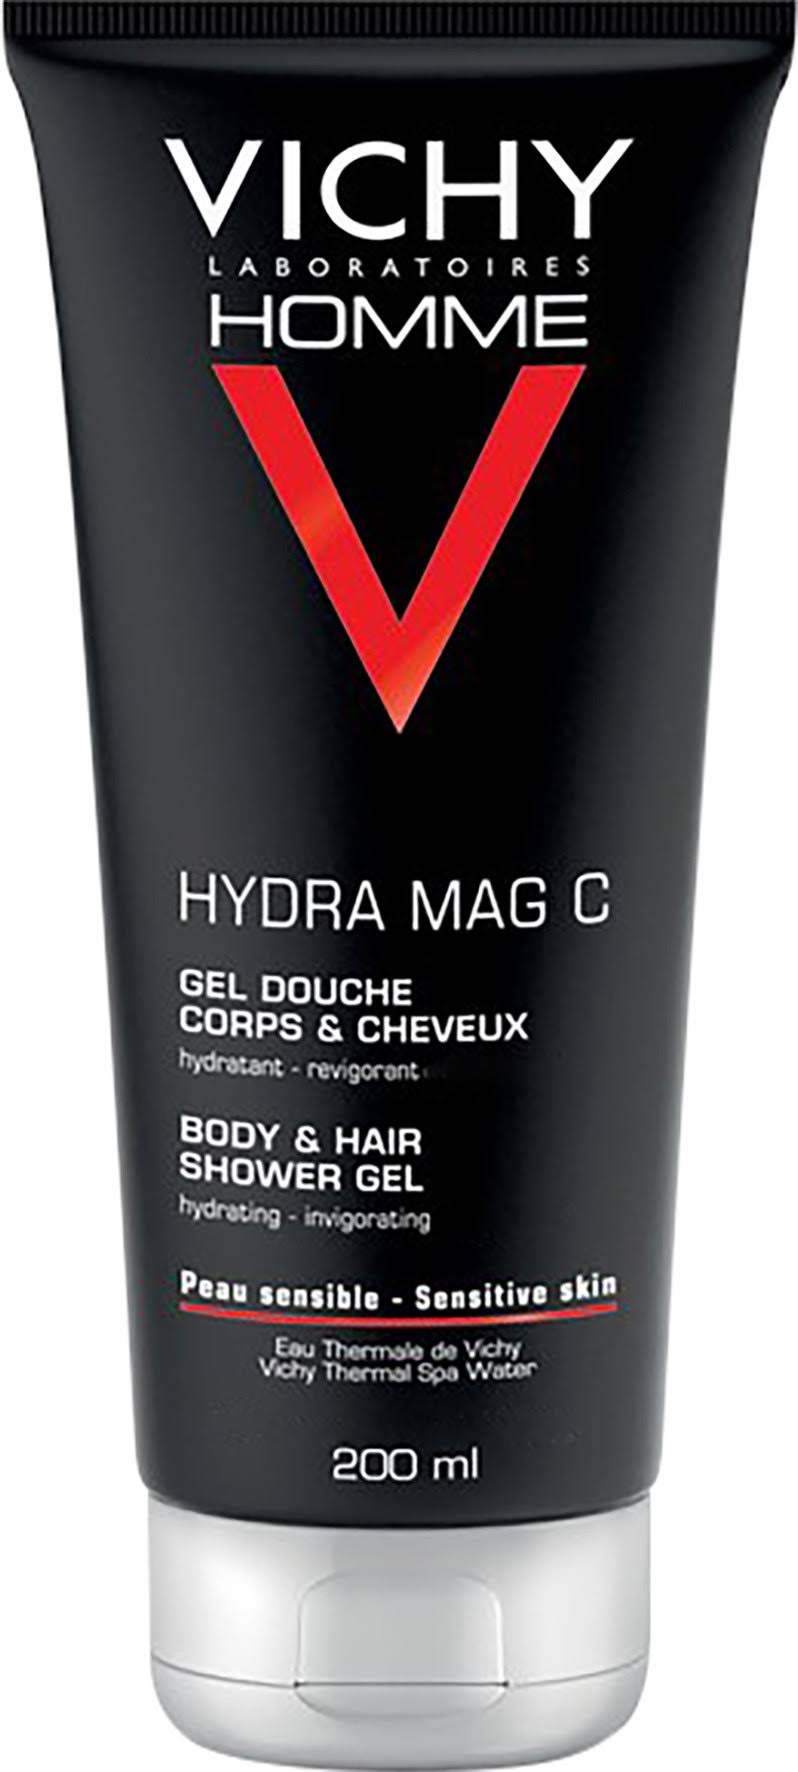 Vichy Homme Body & Hair Shower Gel - 200ml